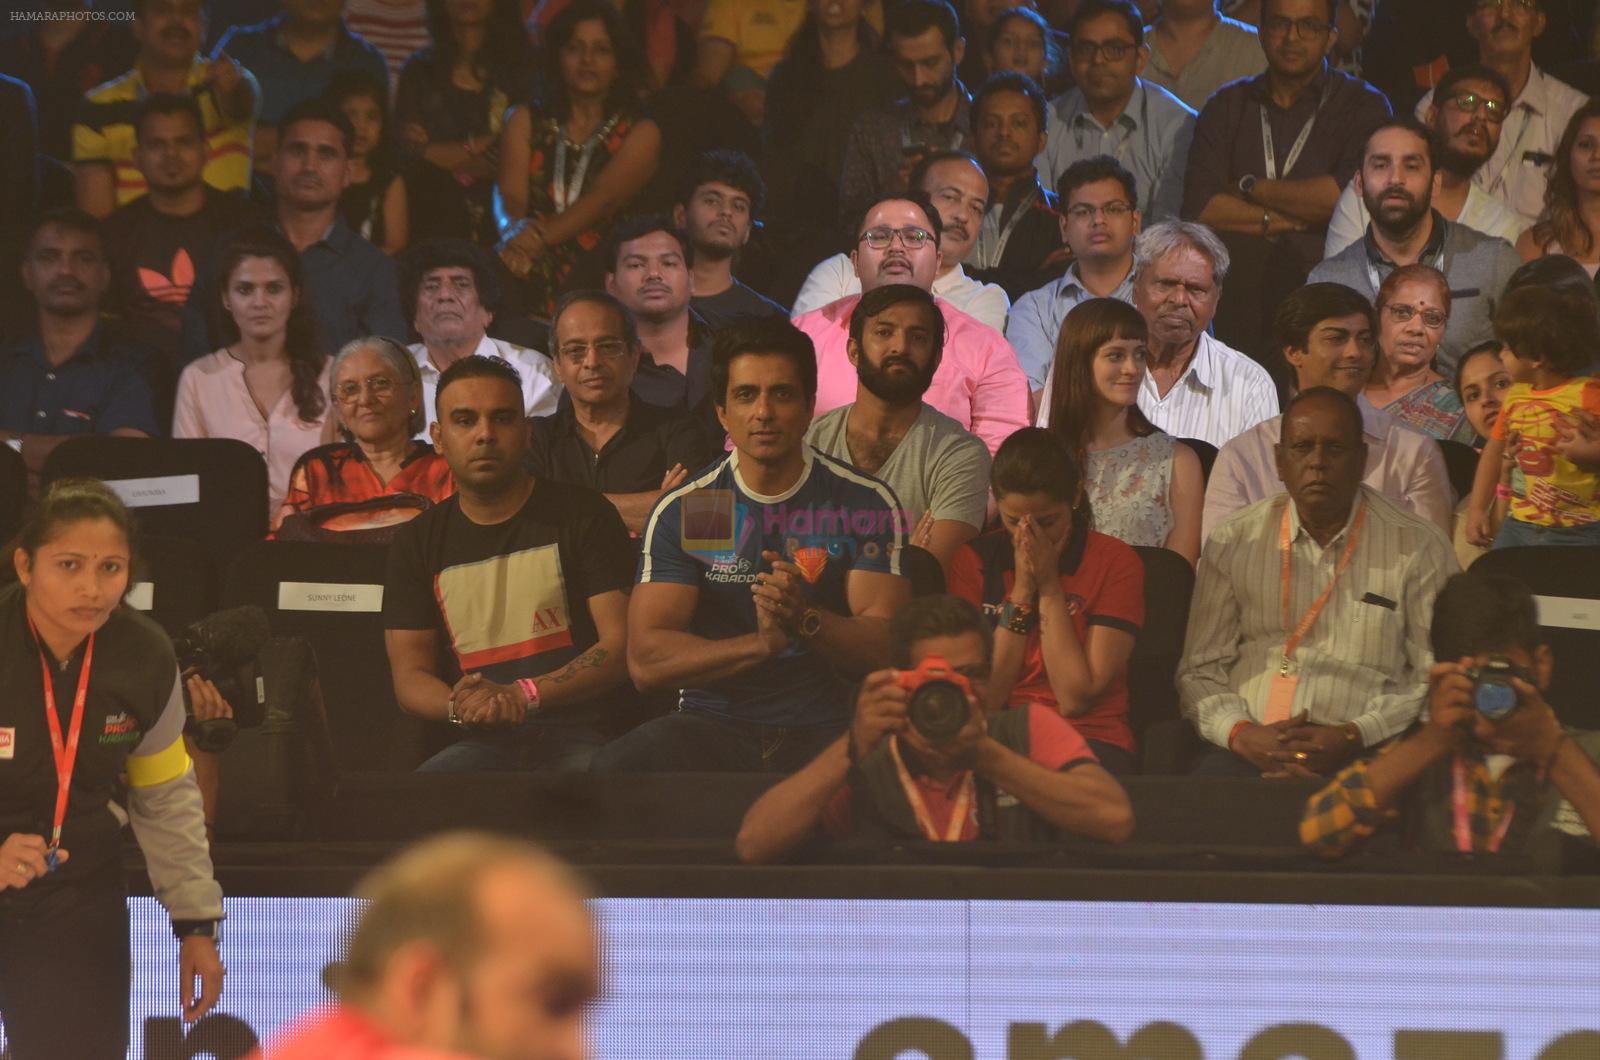 Sonu Sood at Pro Kabaddi Match in Mumbai on 21st July 2016